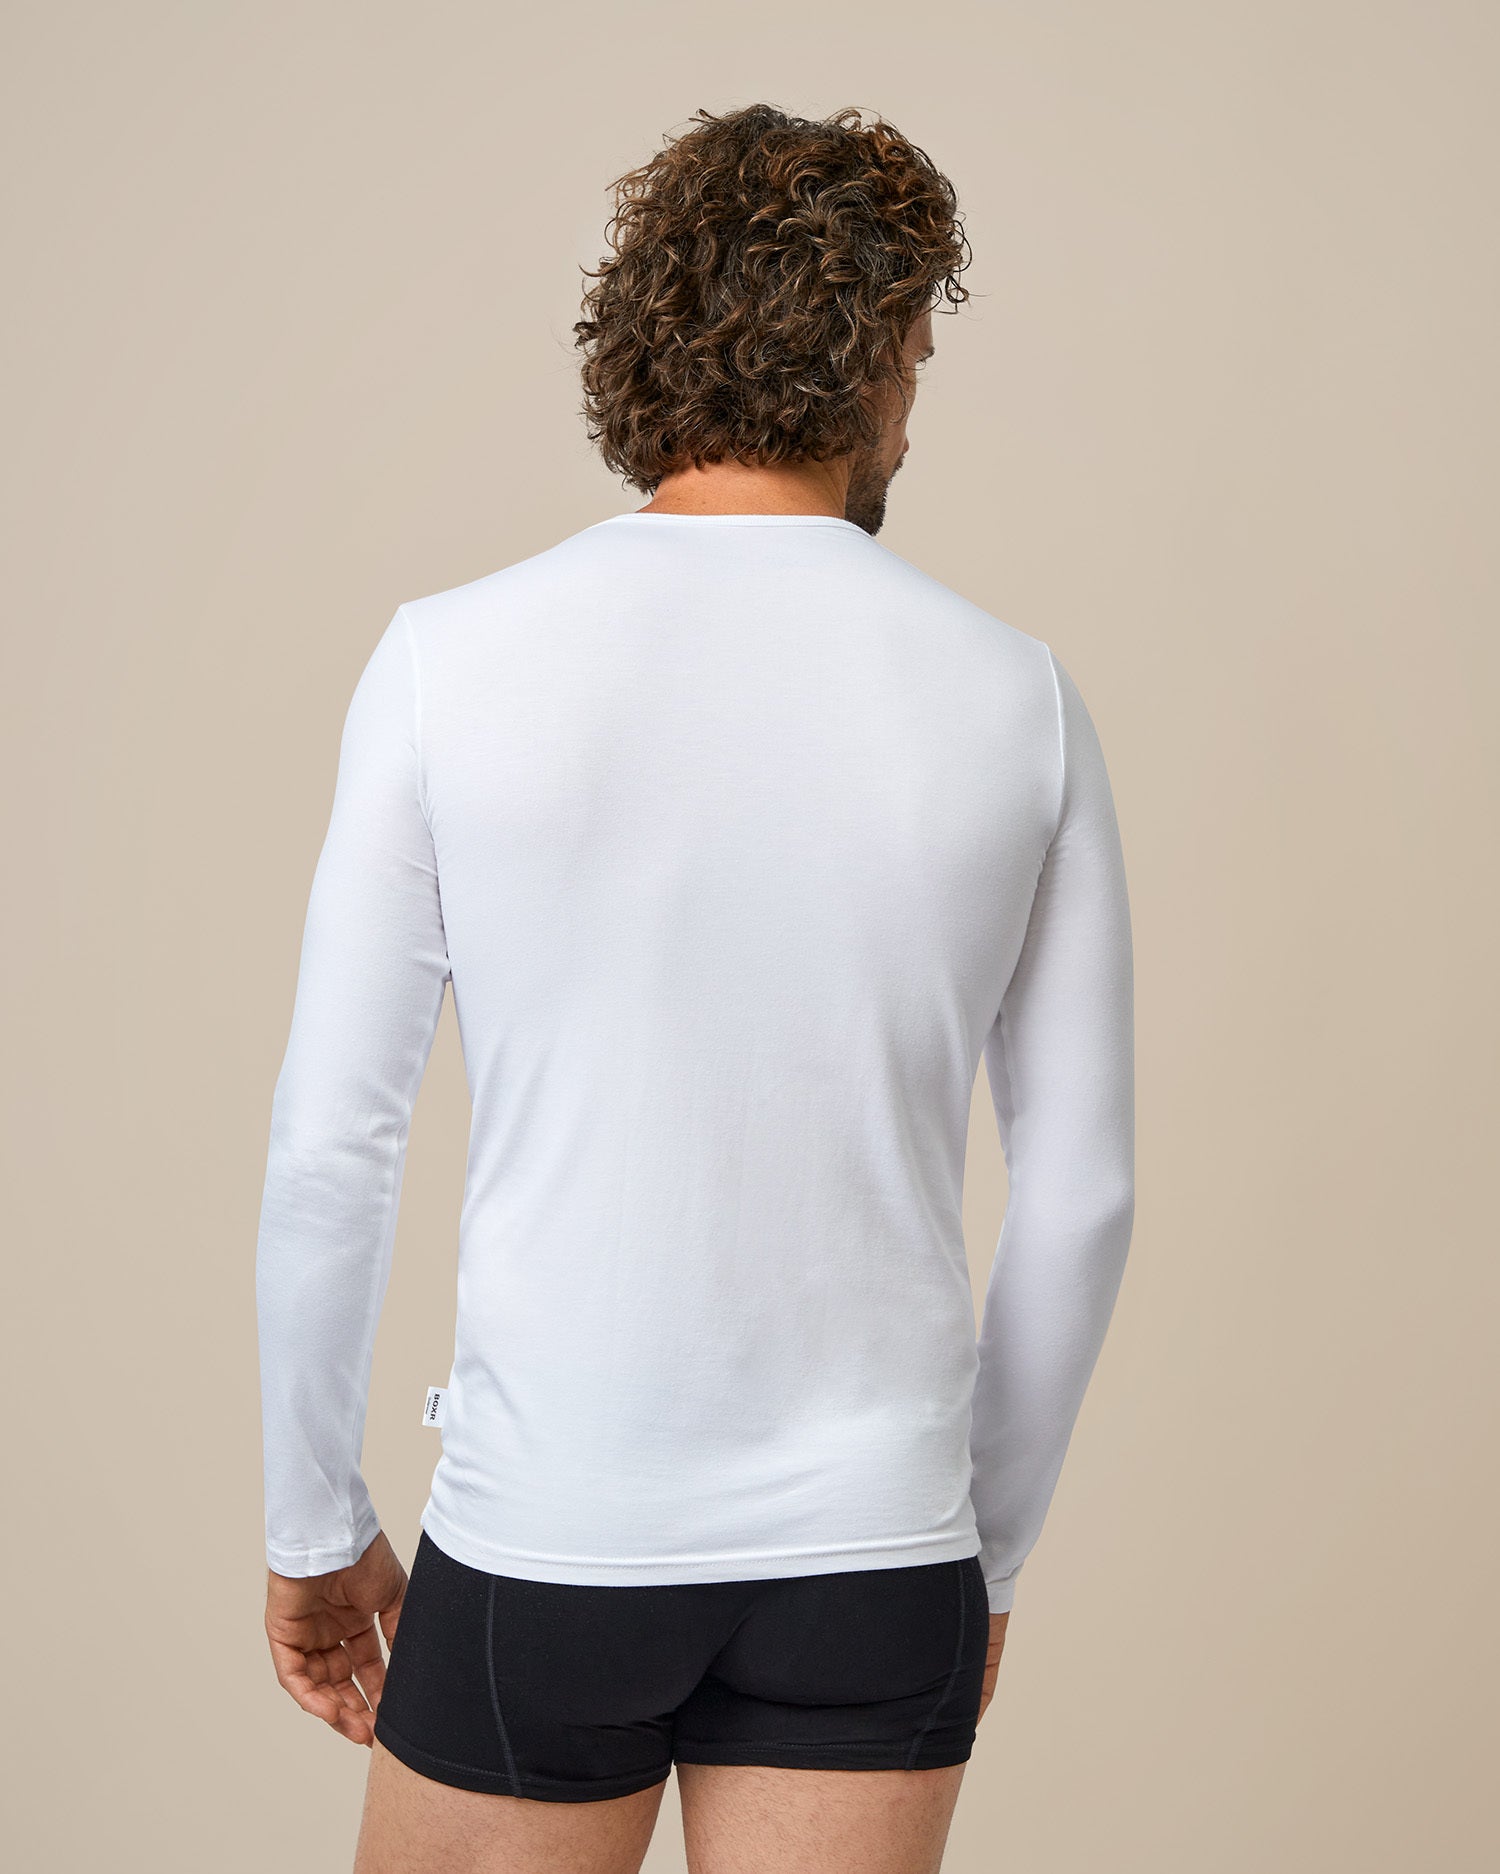 BOXR | Bambus Langarm T-Shirt 2-Pack Weiß